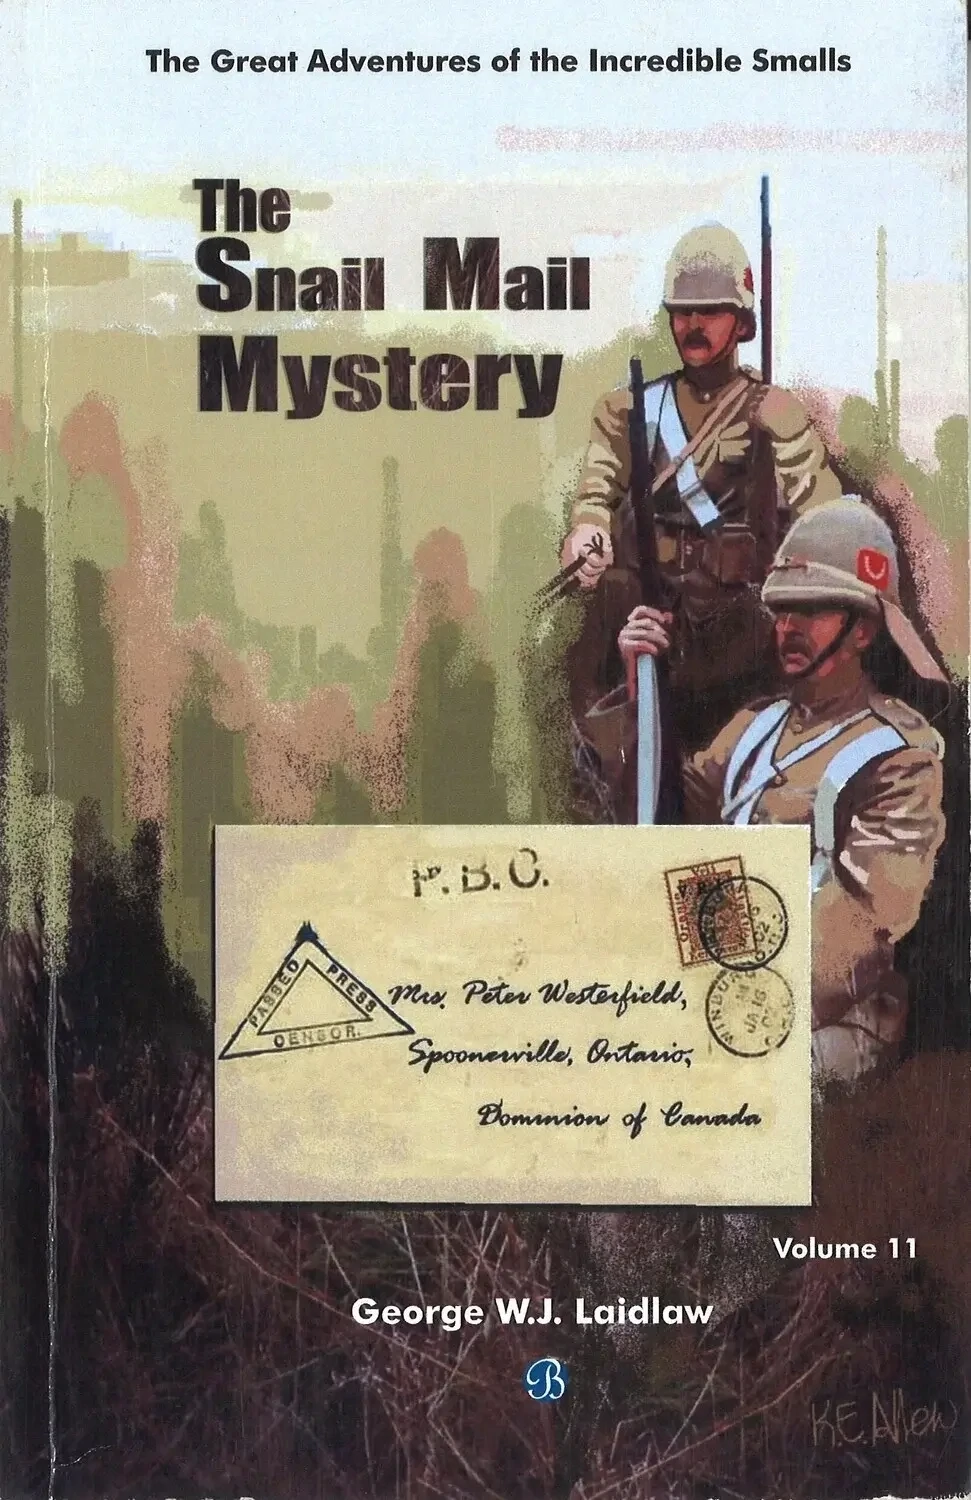 The Snail Mystery Vol. 11 (Signed Copy), George W. J. Laidlaw